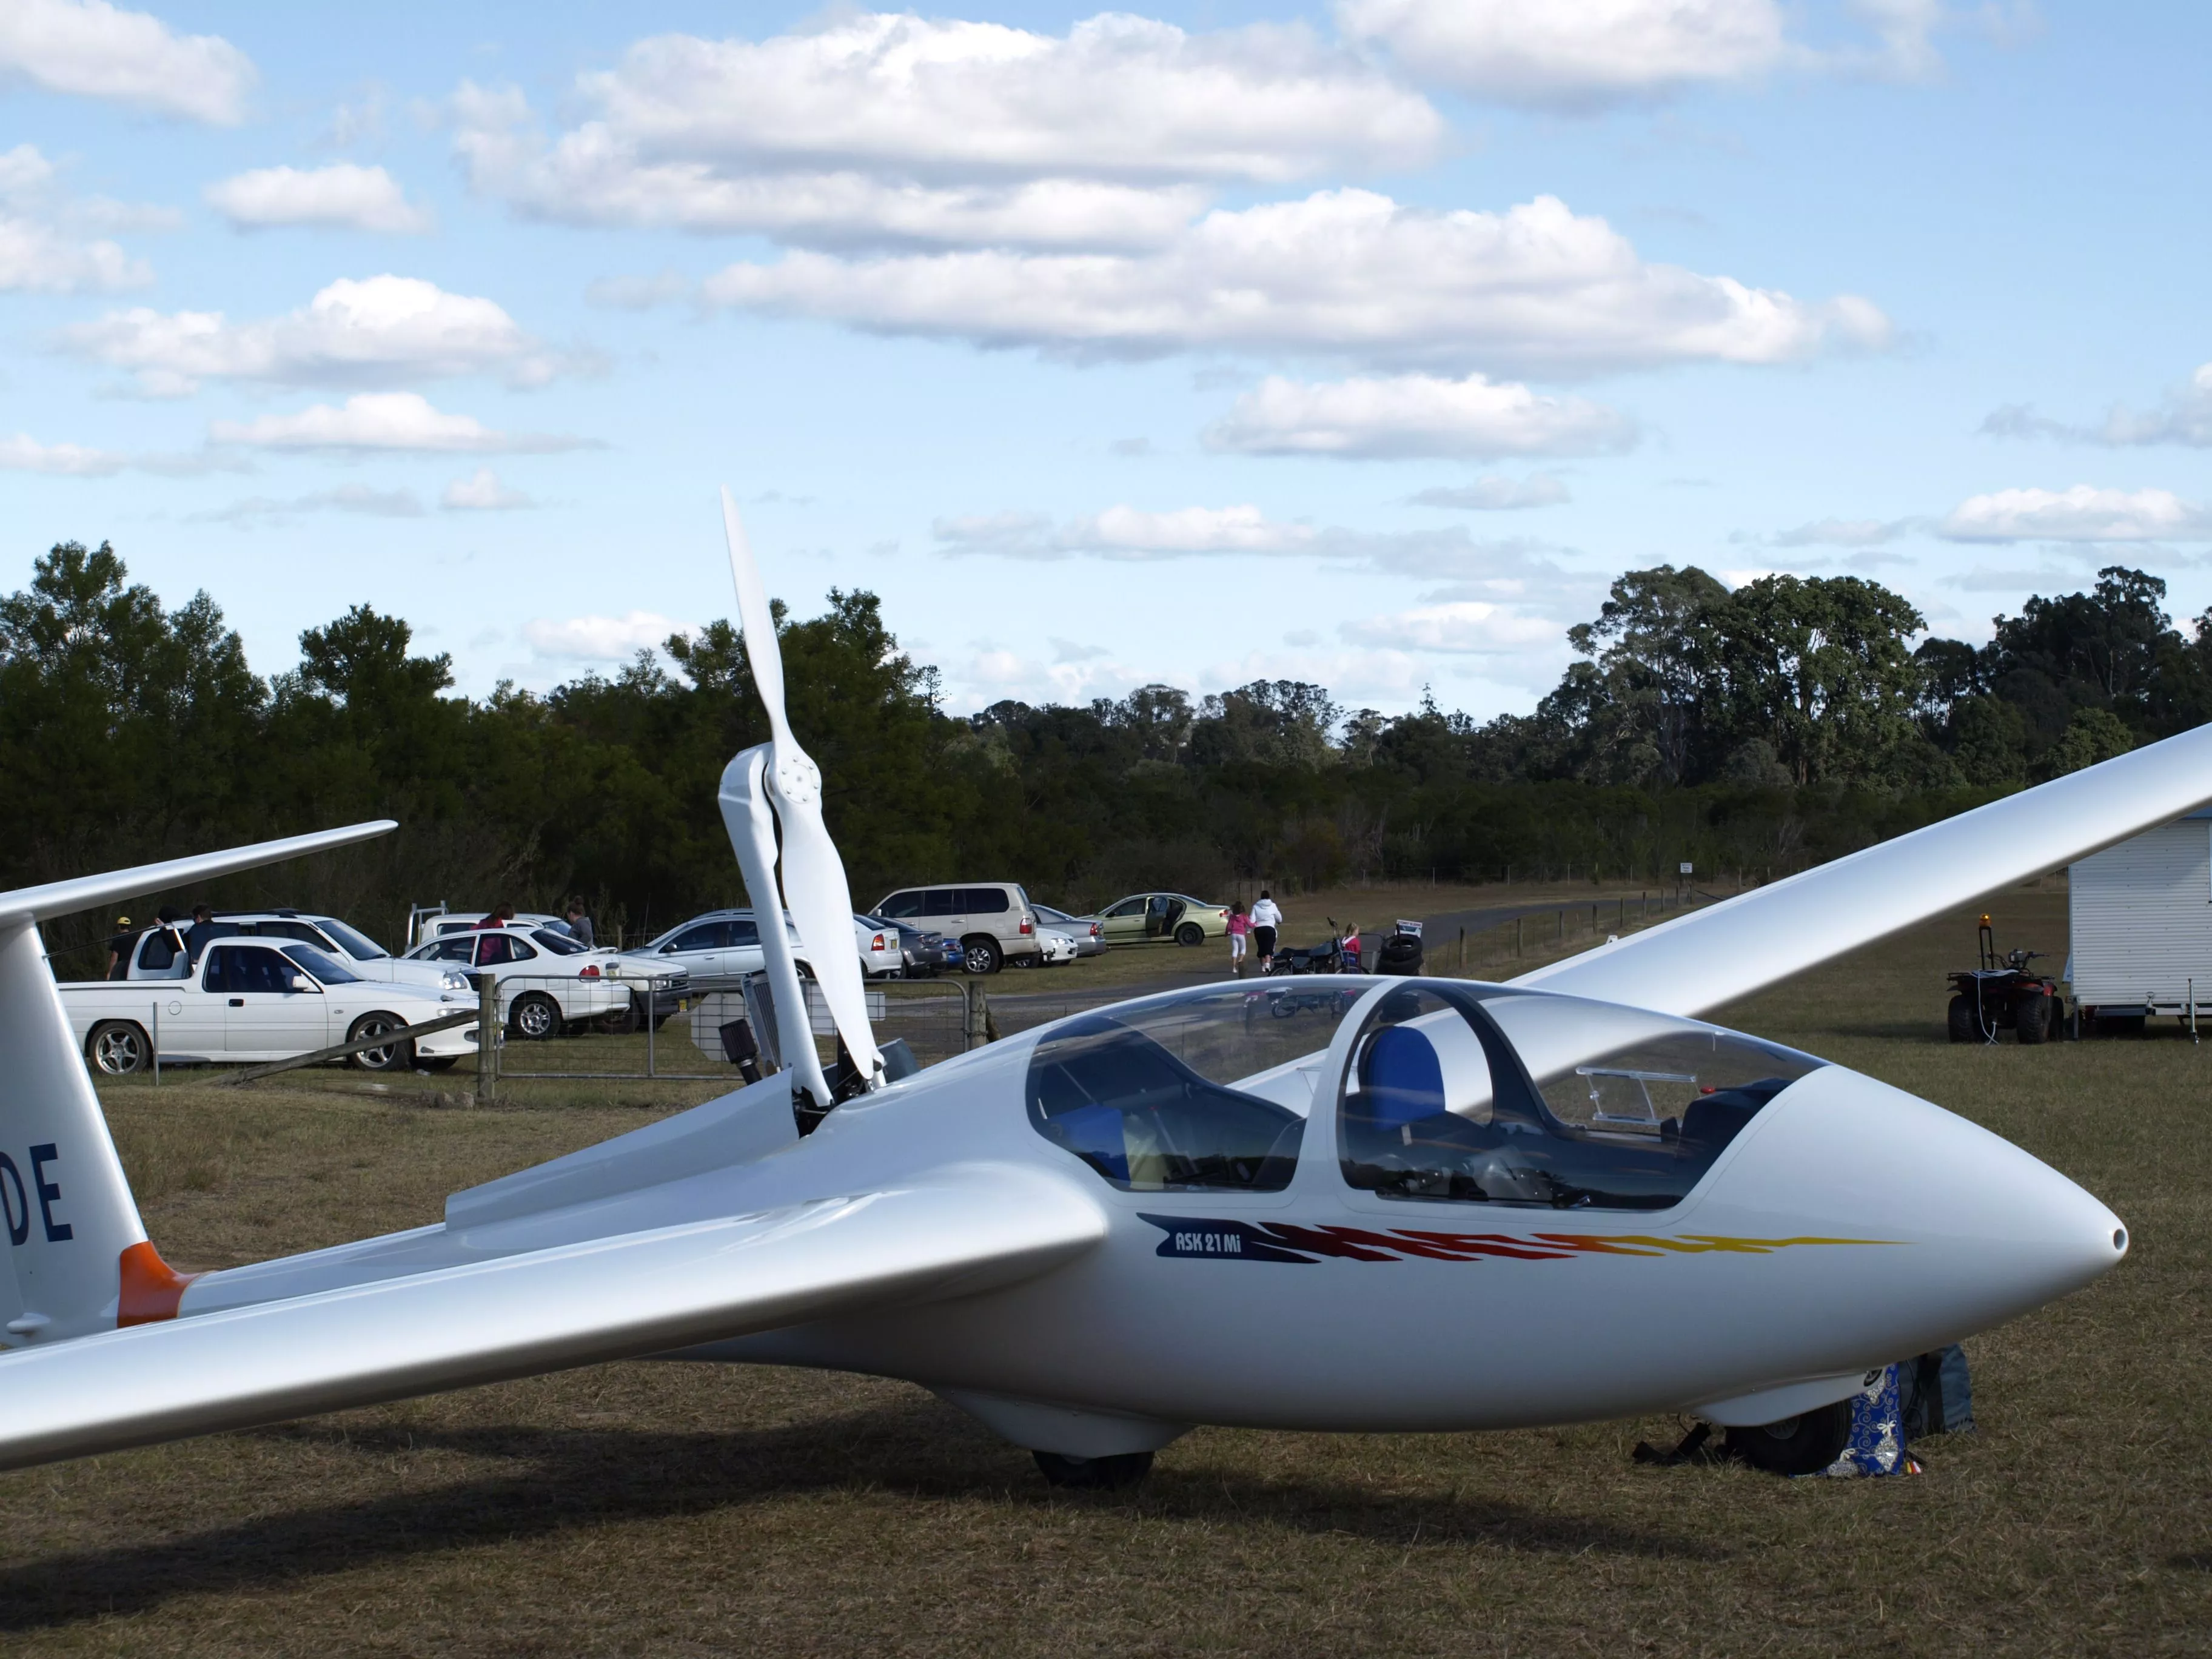 Sydney Glider Flights in Australia, Australia and Oceania | Sailplane - Rated 1.1